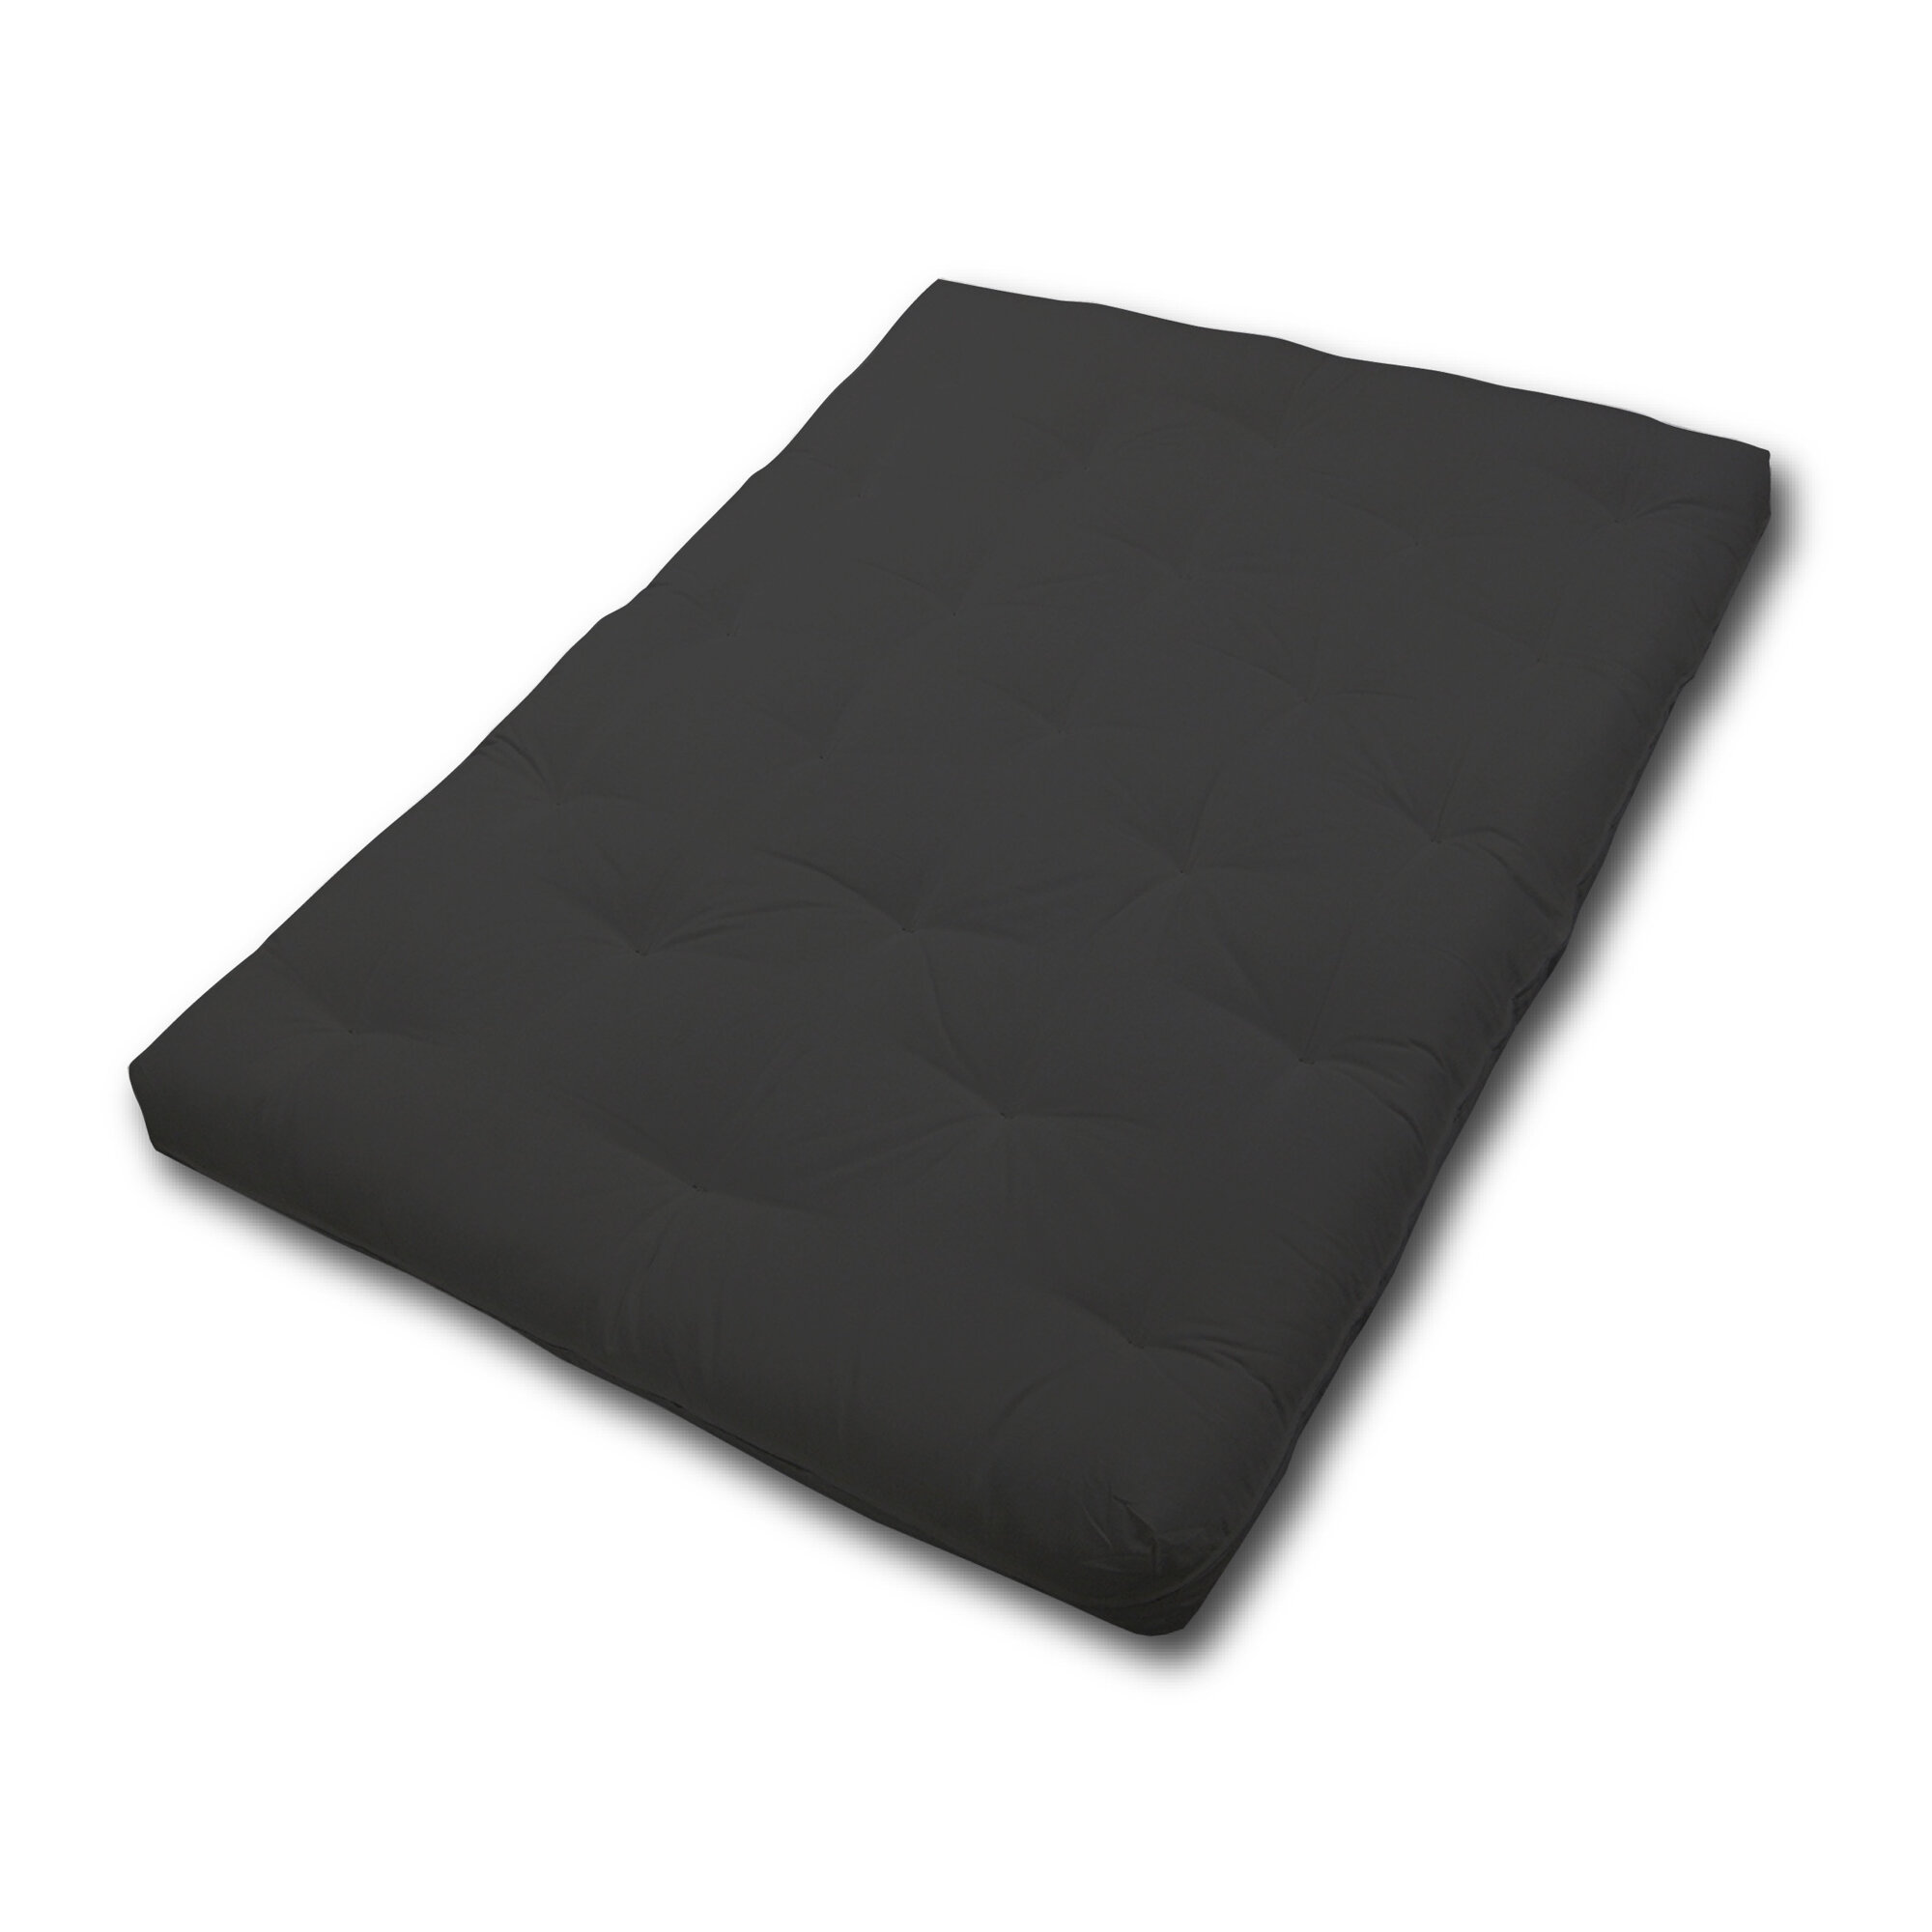 Kumari 6'' Thick Floor Futon Mattress Alwyn Home Size: Full, Color: Black